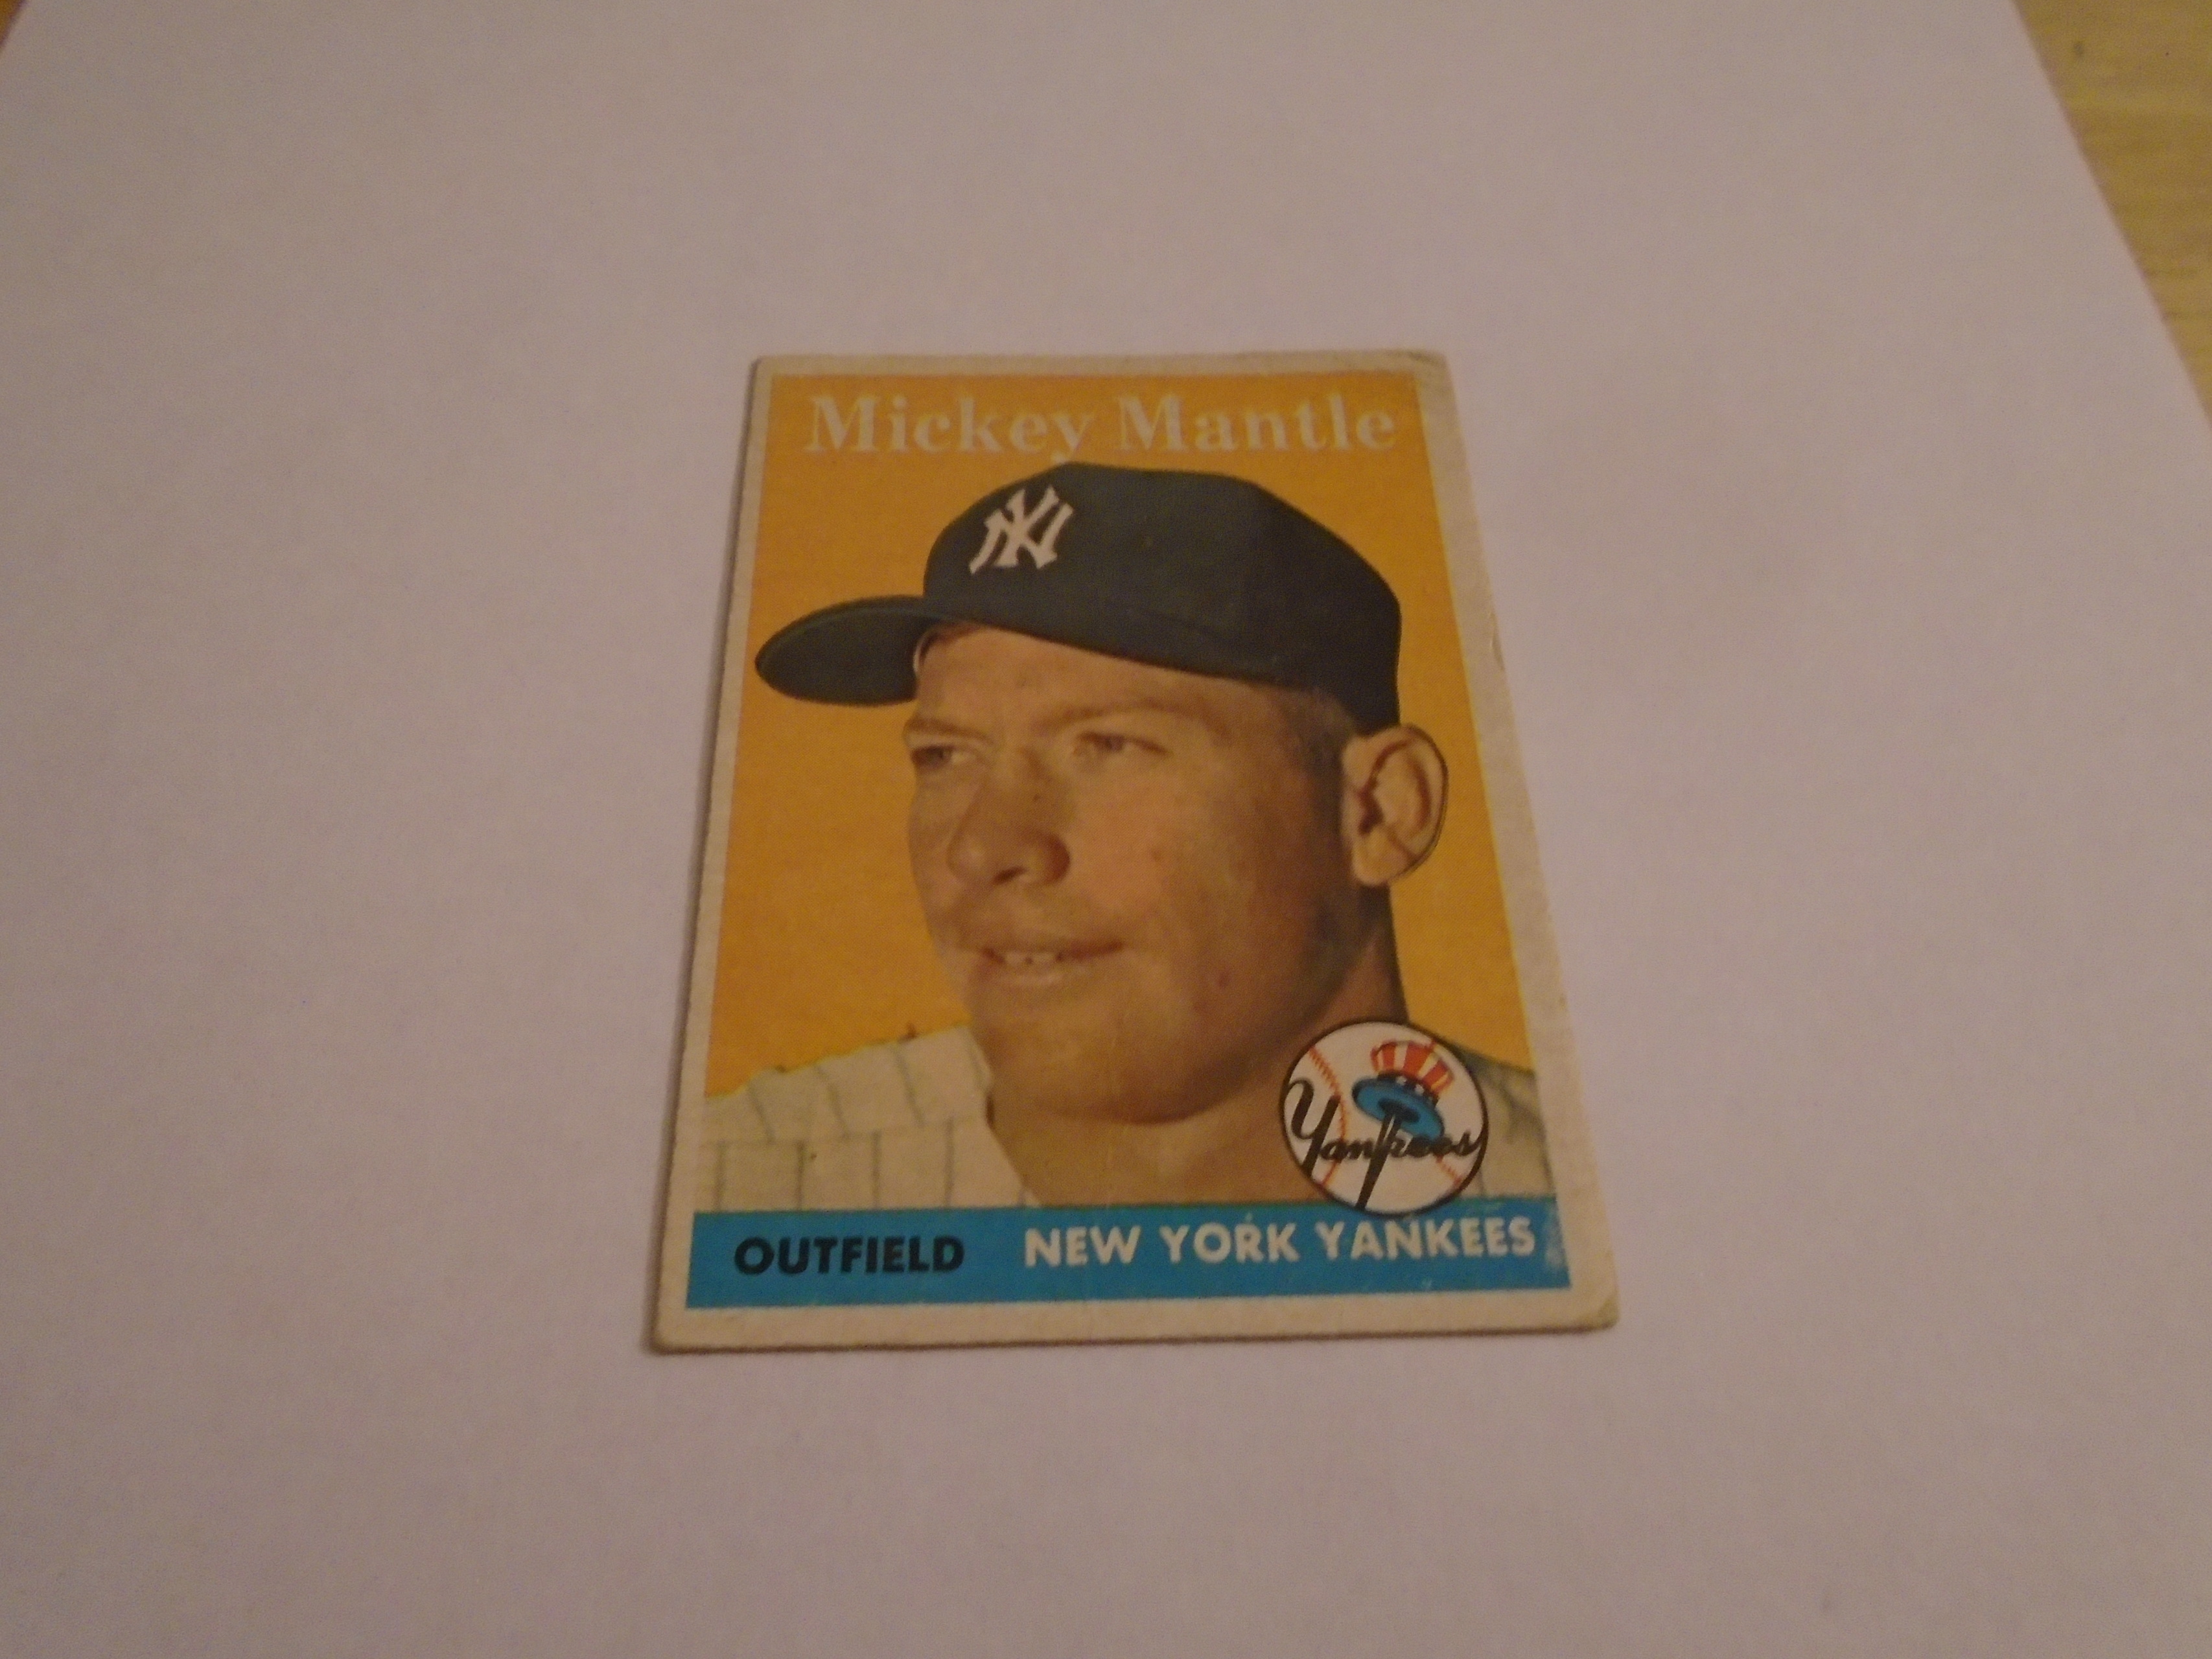 Mickey Mantle 1958 Topps Baseball Card.